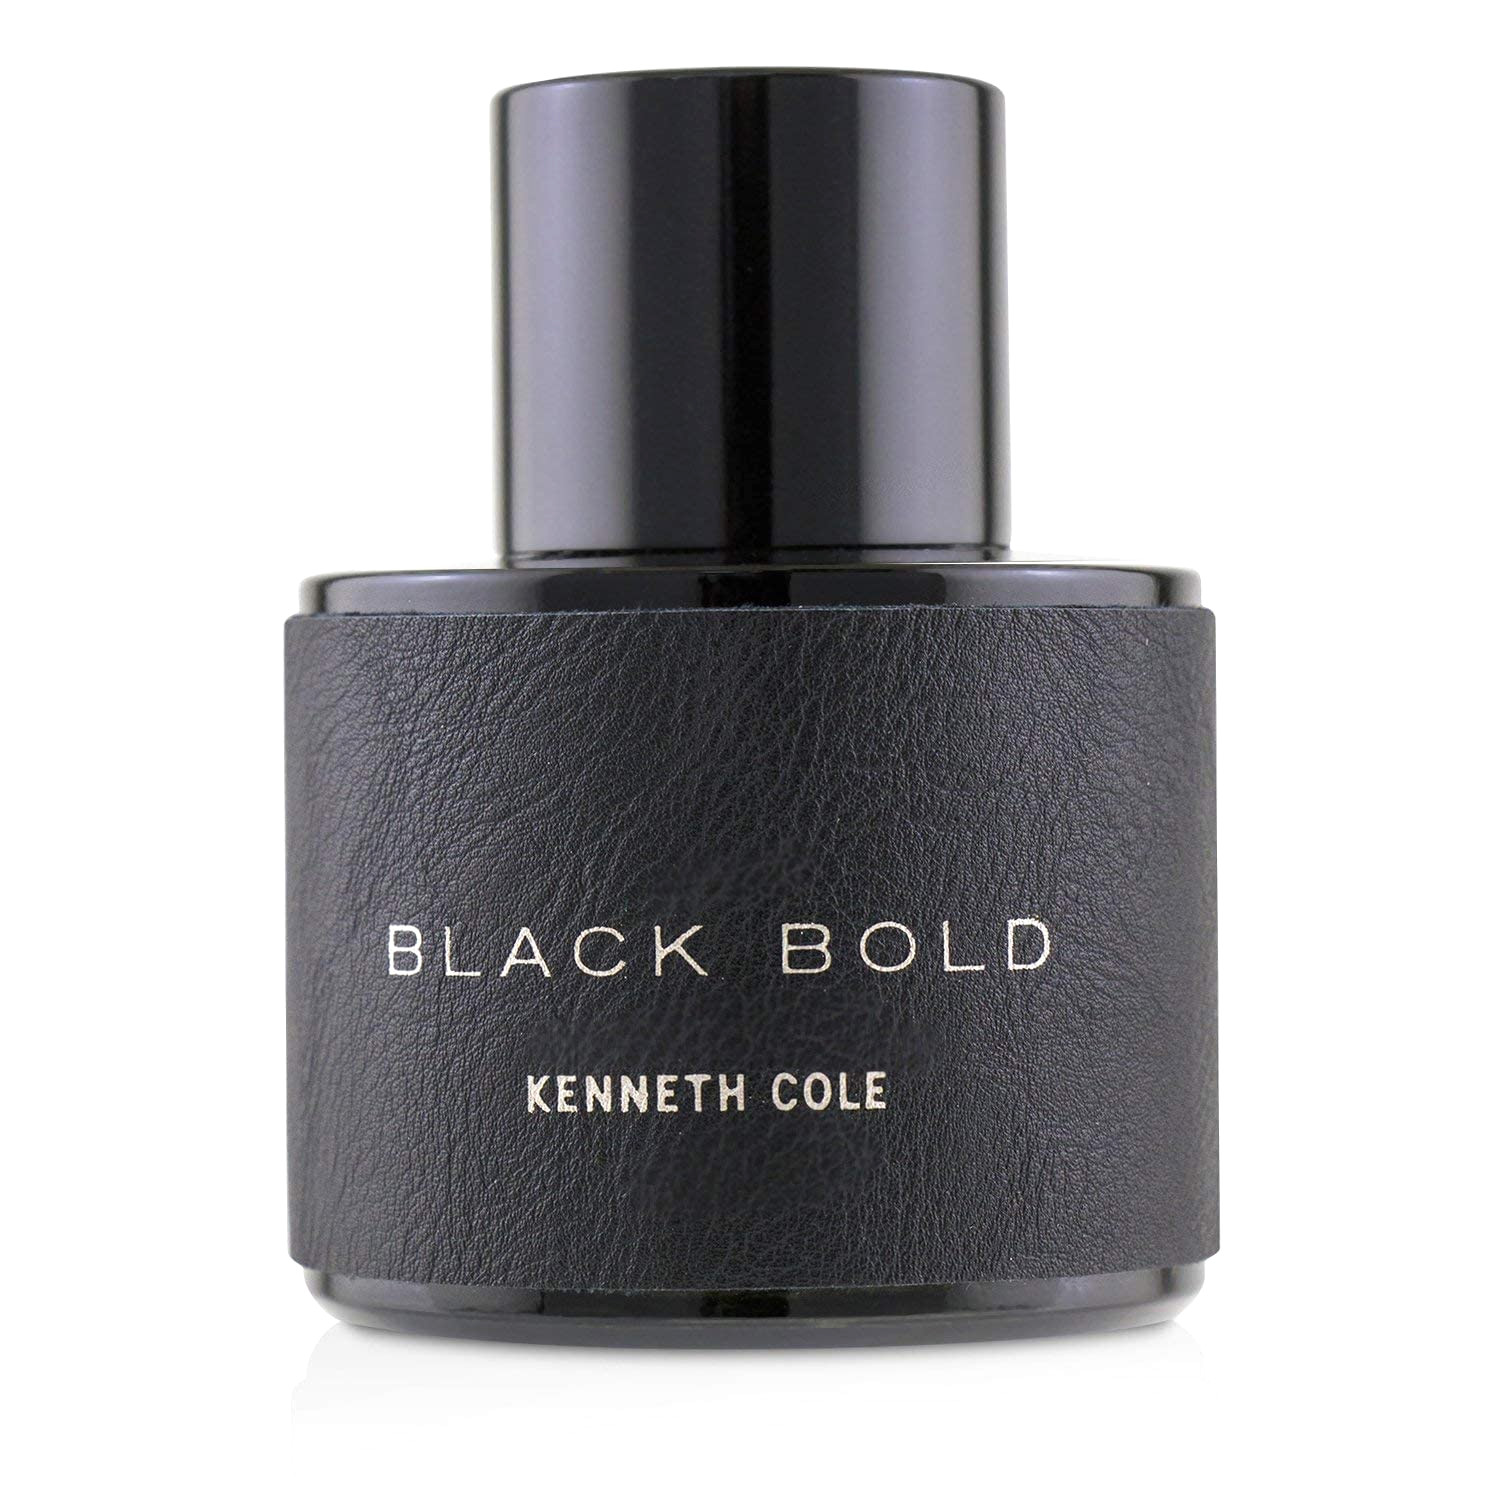 Вода парфюмерная Kenneth Cole Black Bold мужская, 100 мл ayoume ночная маска для лица с муцином черной улитки black snail prestige 50